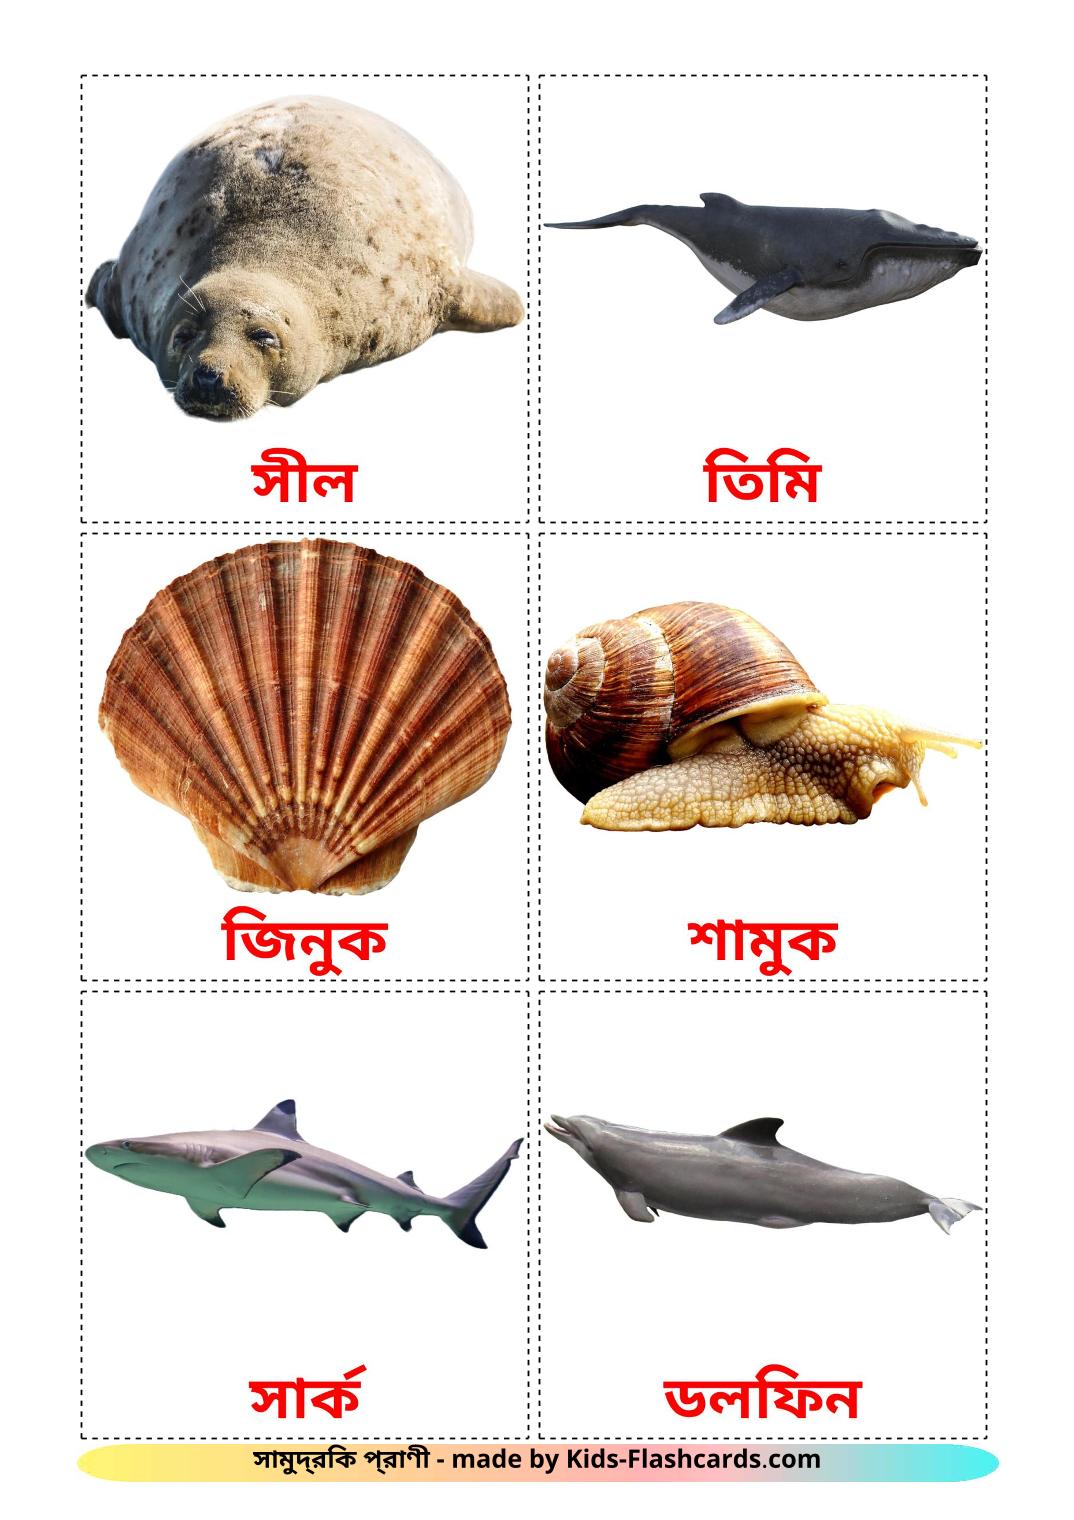 Animales Marinos - 29 fichas de bengalí para imprimir gratis 